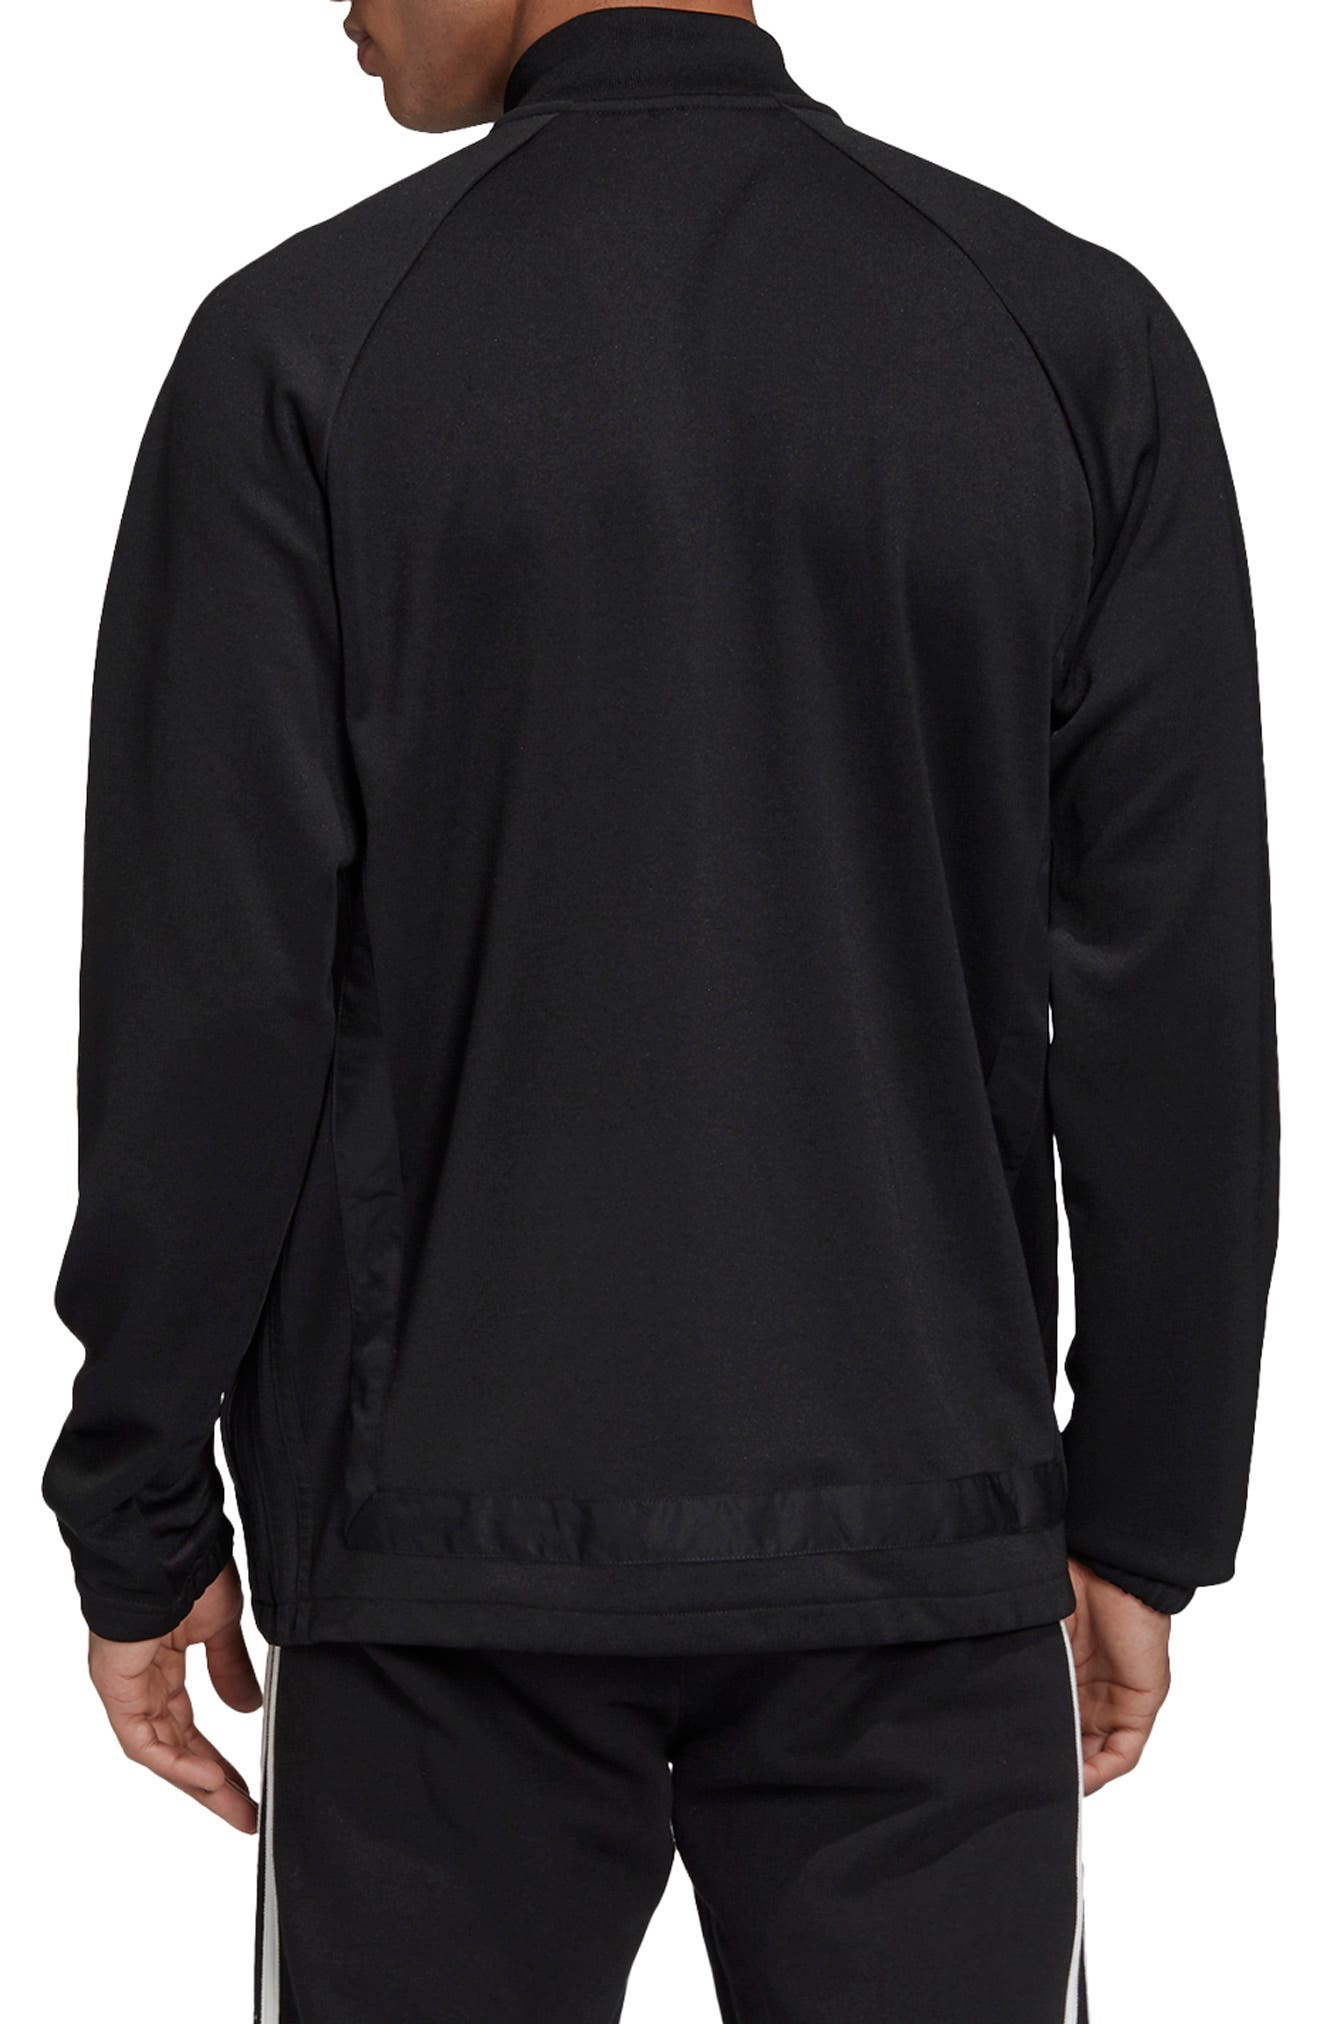 UPC 191533002514 product image for Men's Adidas Originals Interlock Warm-Up Track Jacket, Size Small - Black | upcitemdb.com